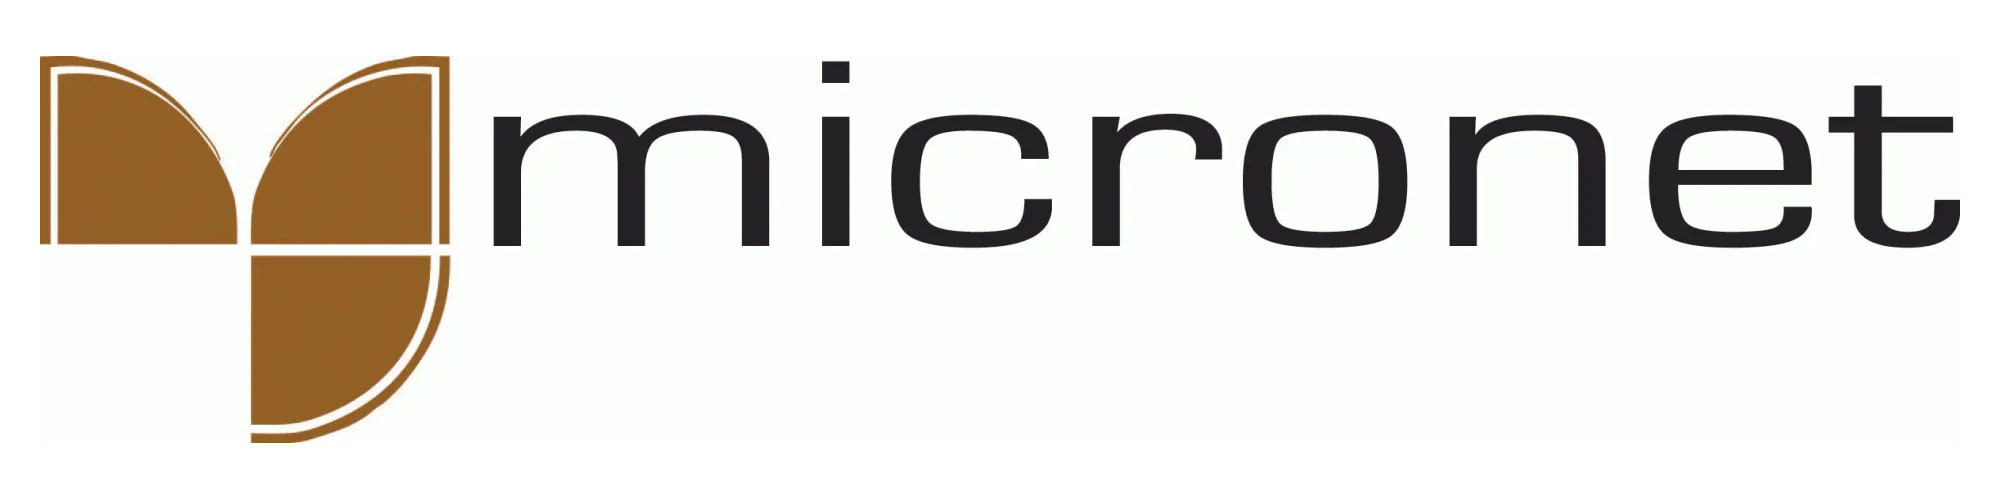 Micronet Systems logo